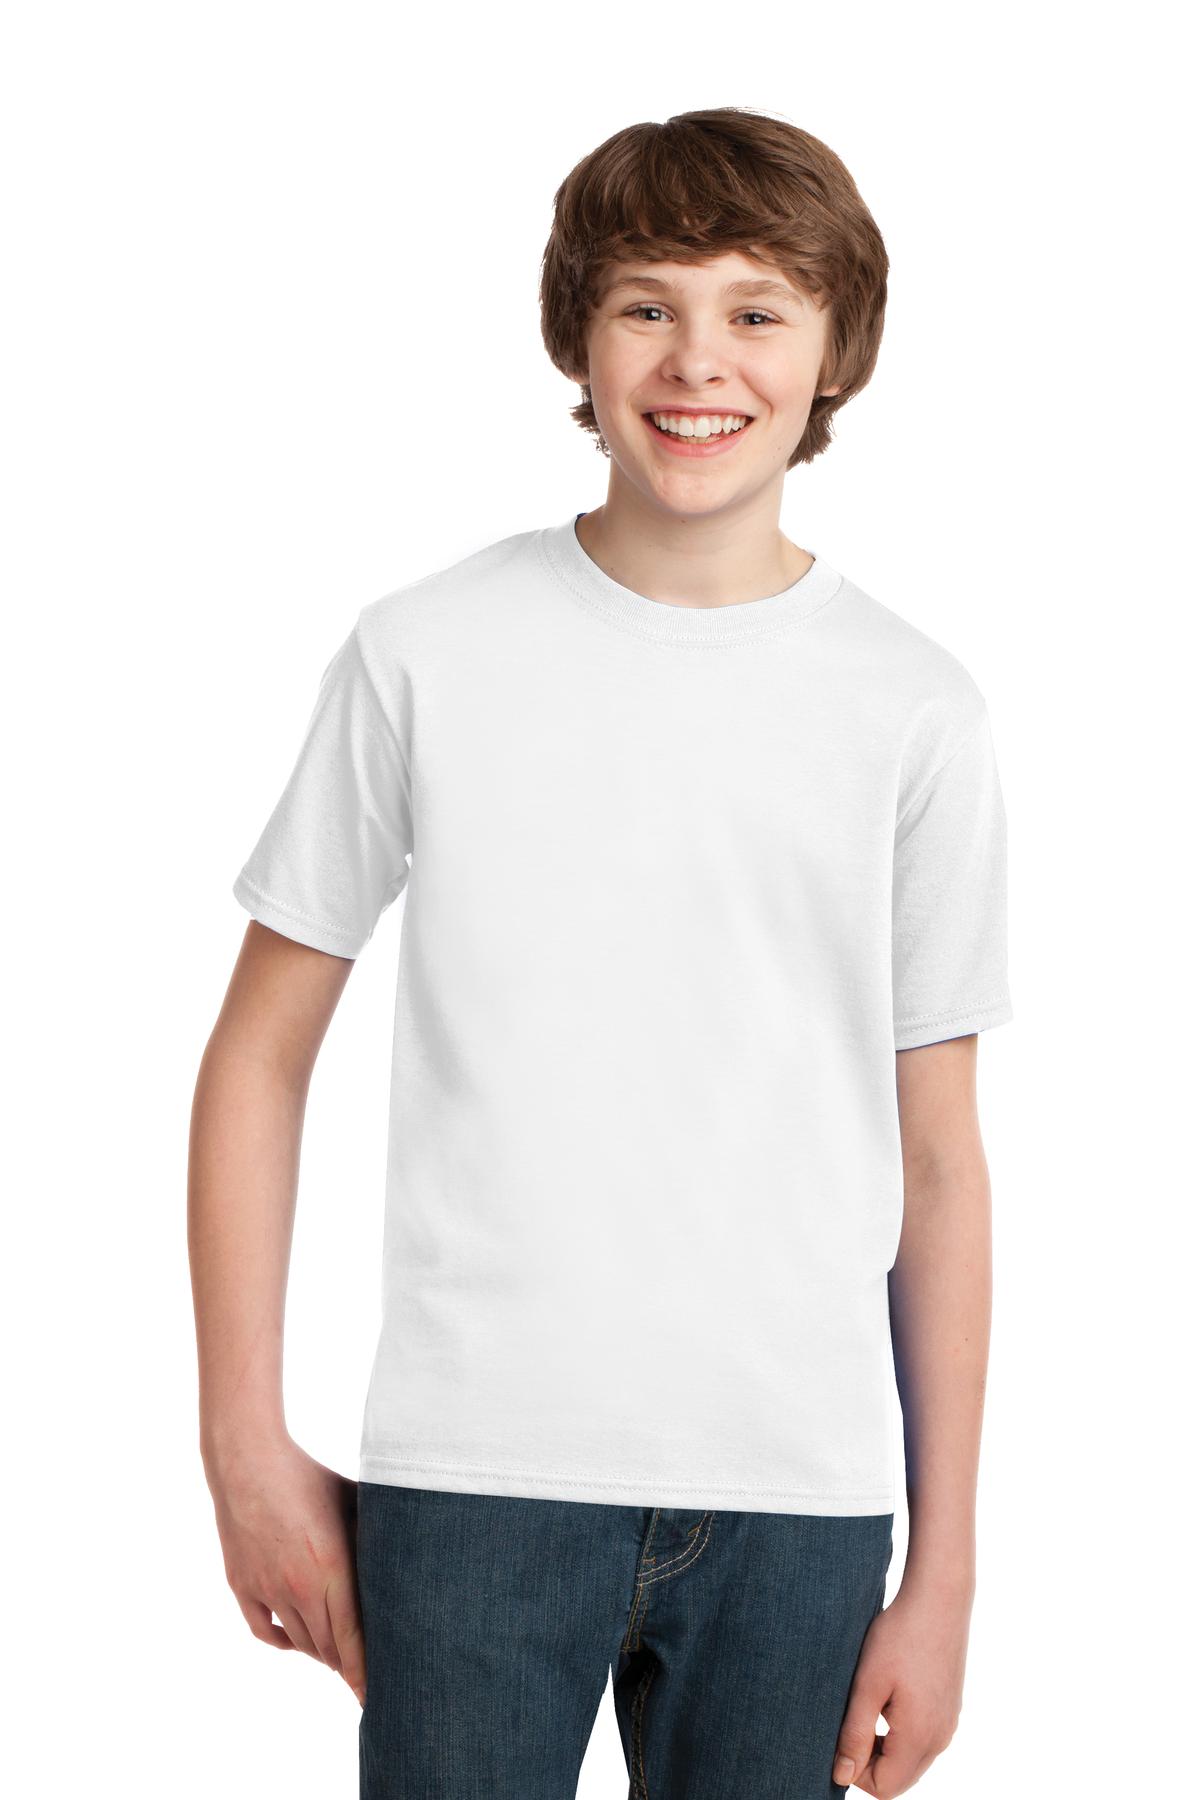 Port & Company Hospitality Youth T-Shirts ® - Youth Essential Tee.-Port & Company